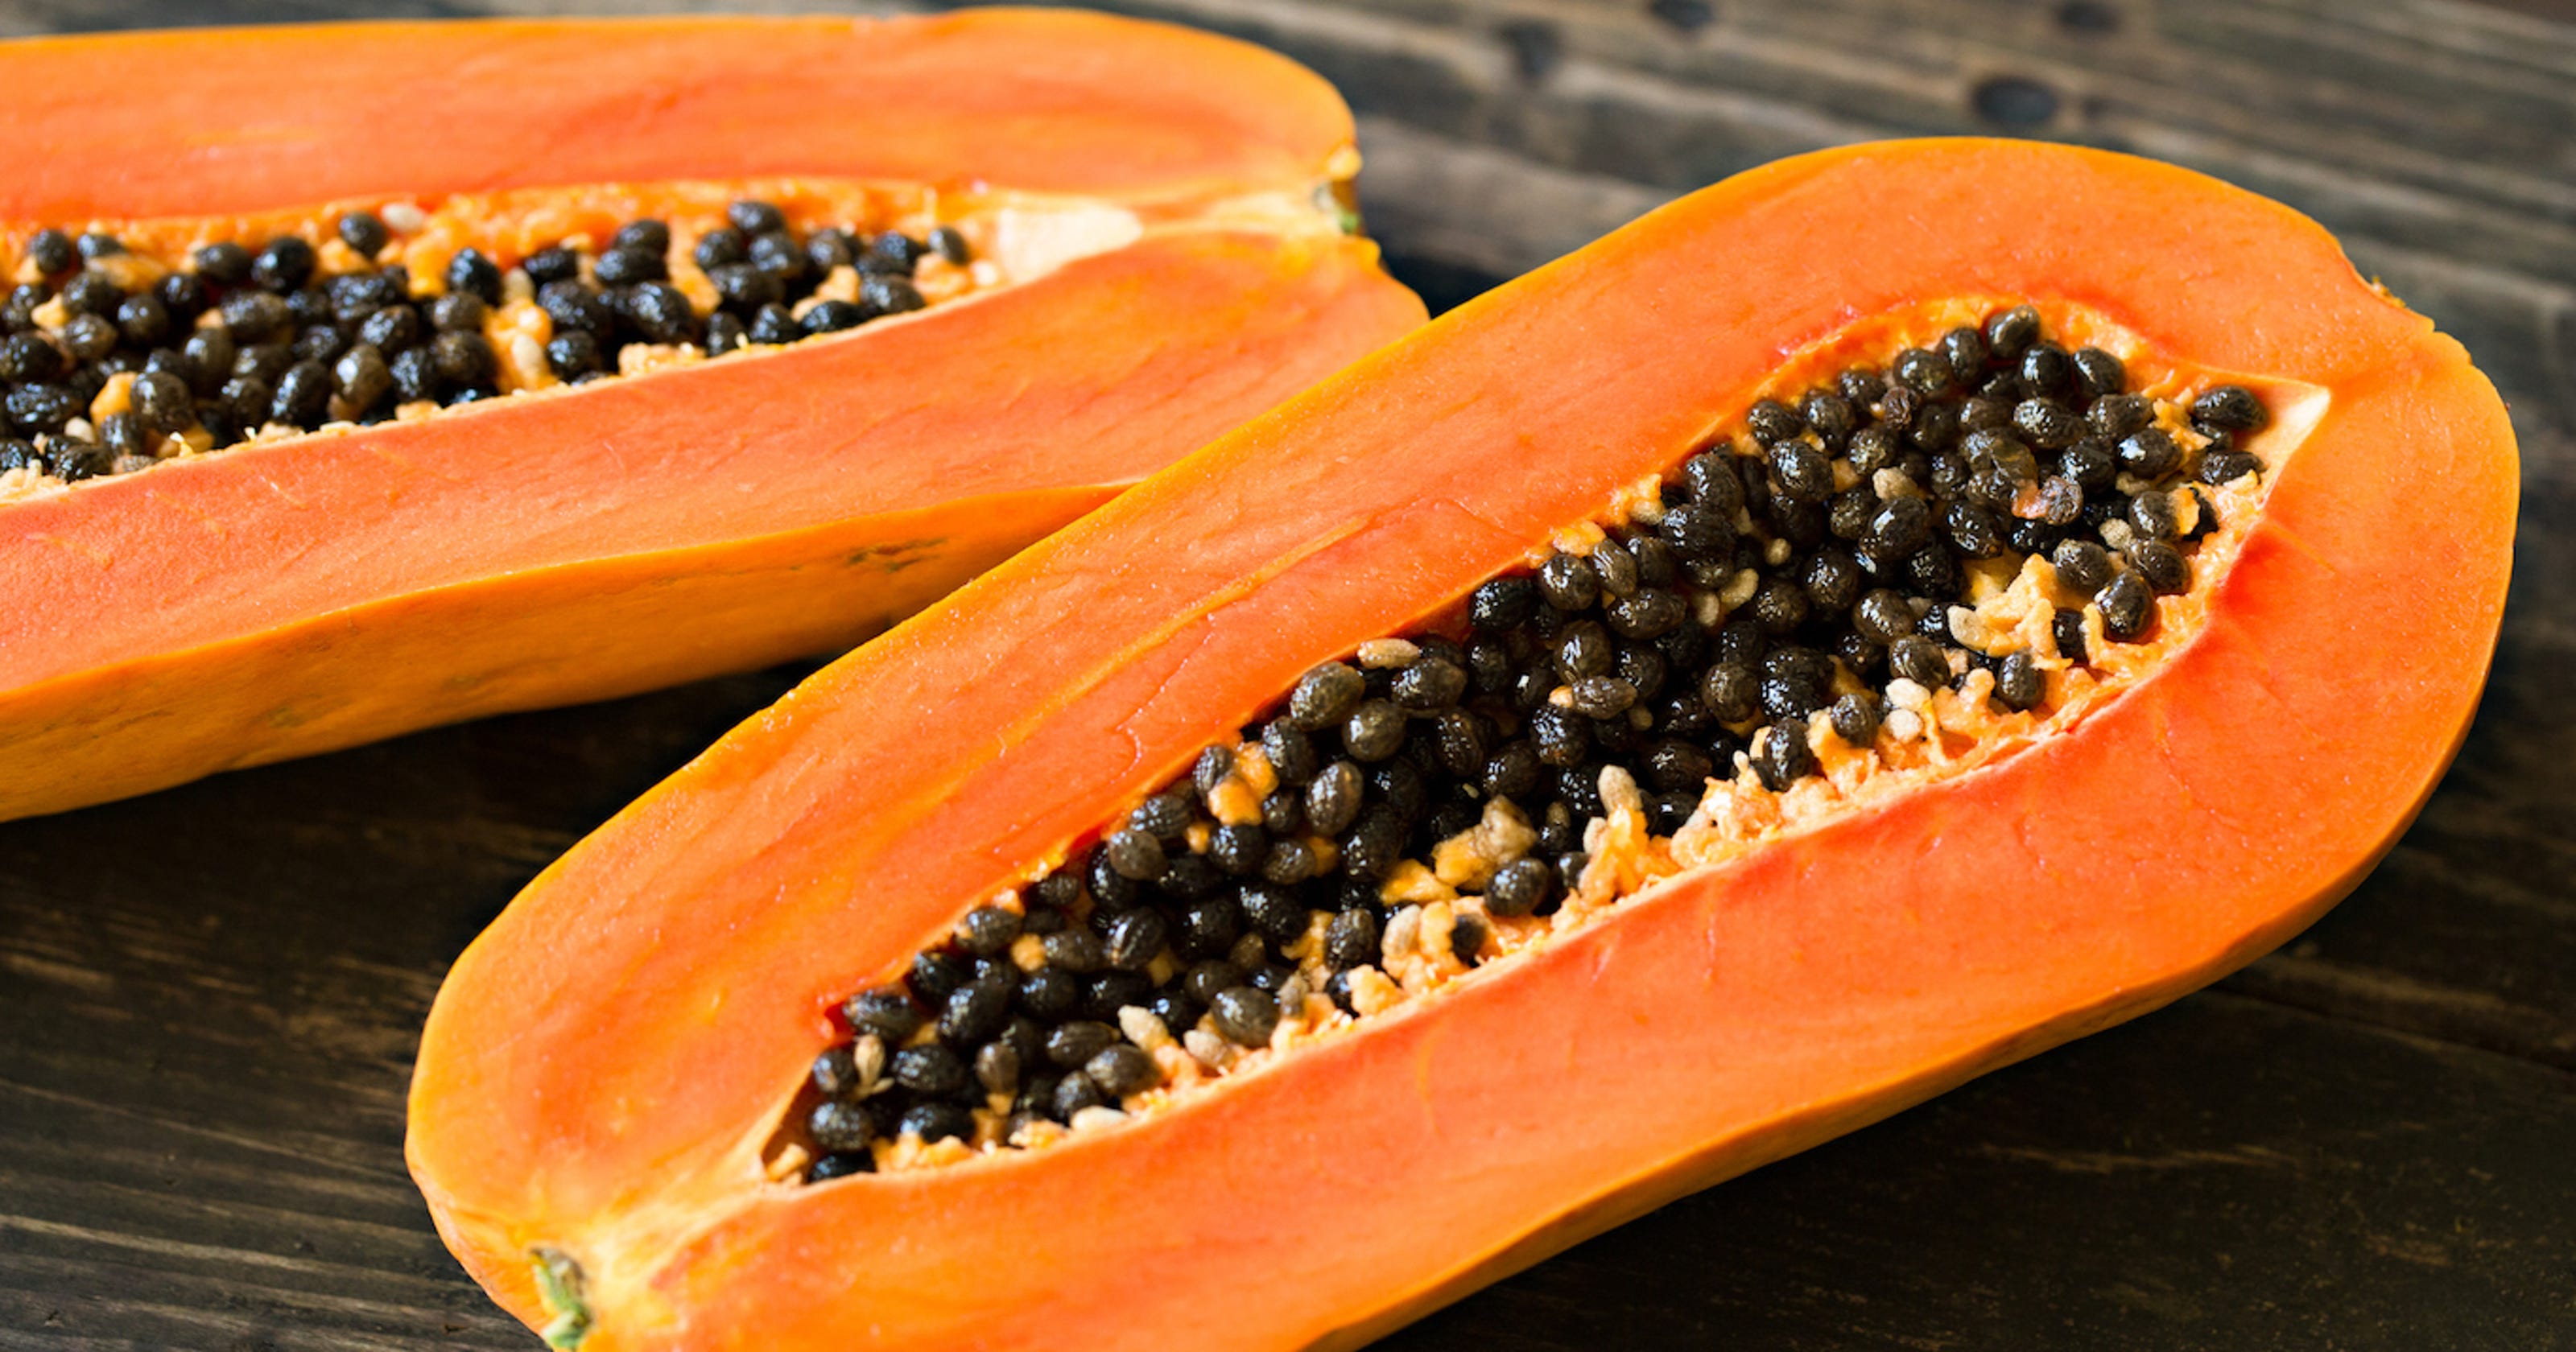 Household Treasures Papayas Antioxidants And Nourishments